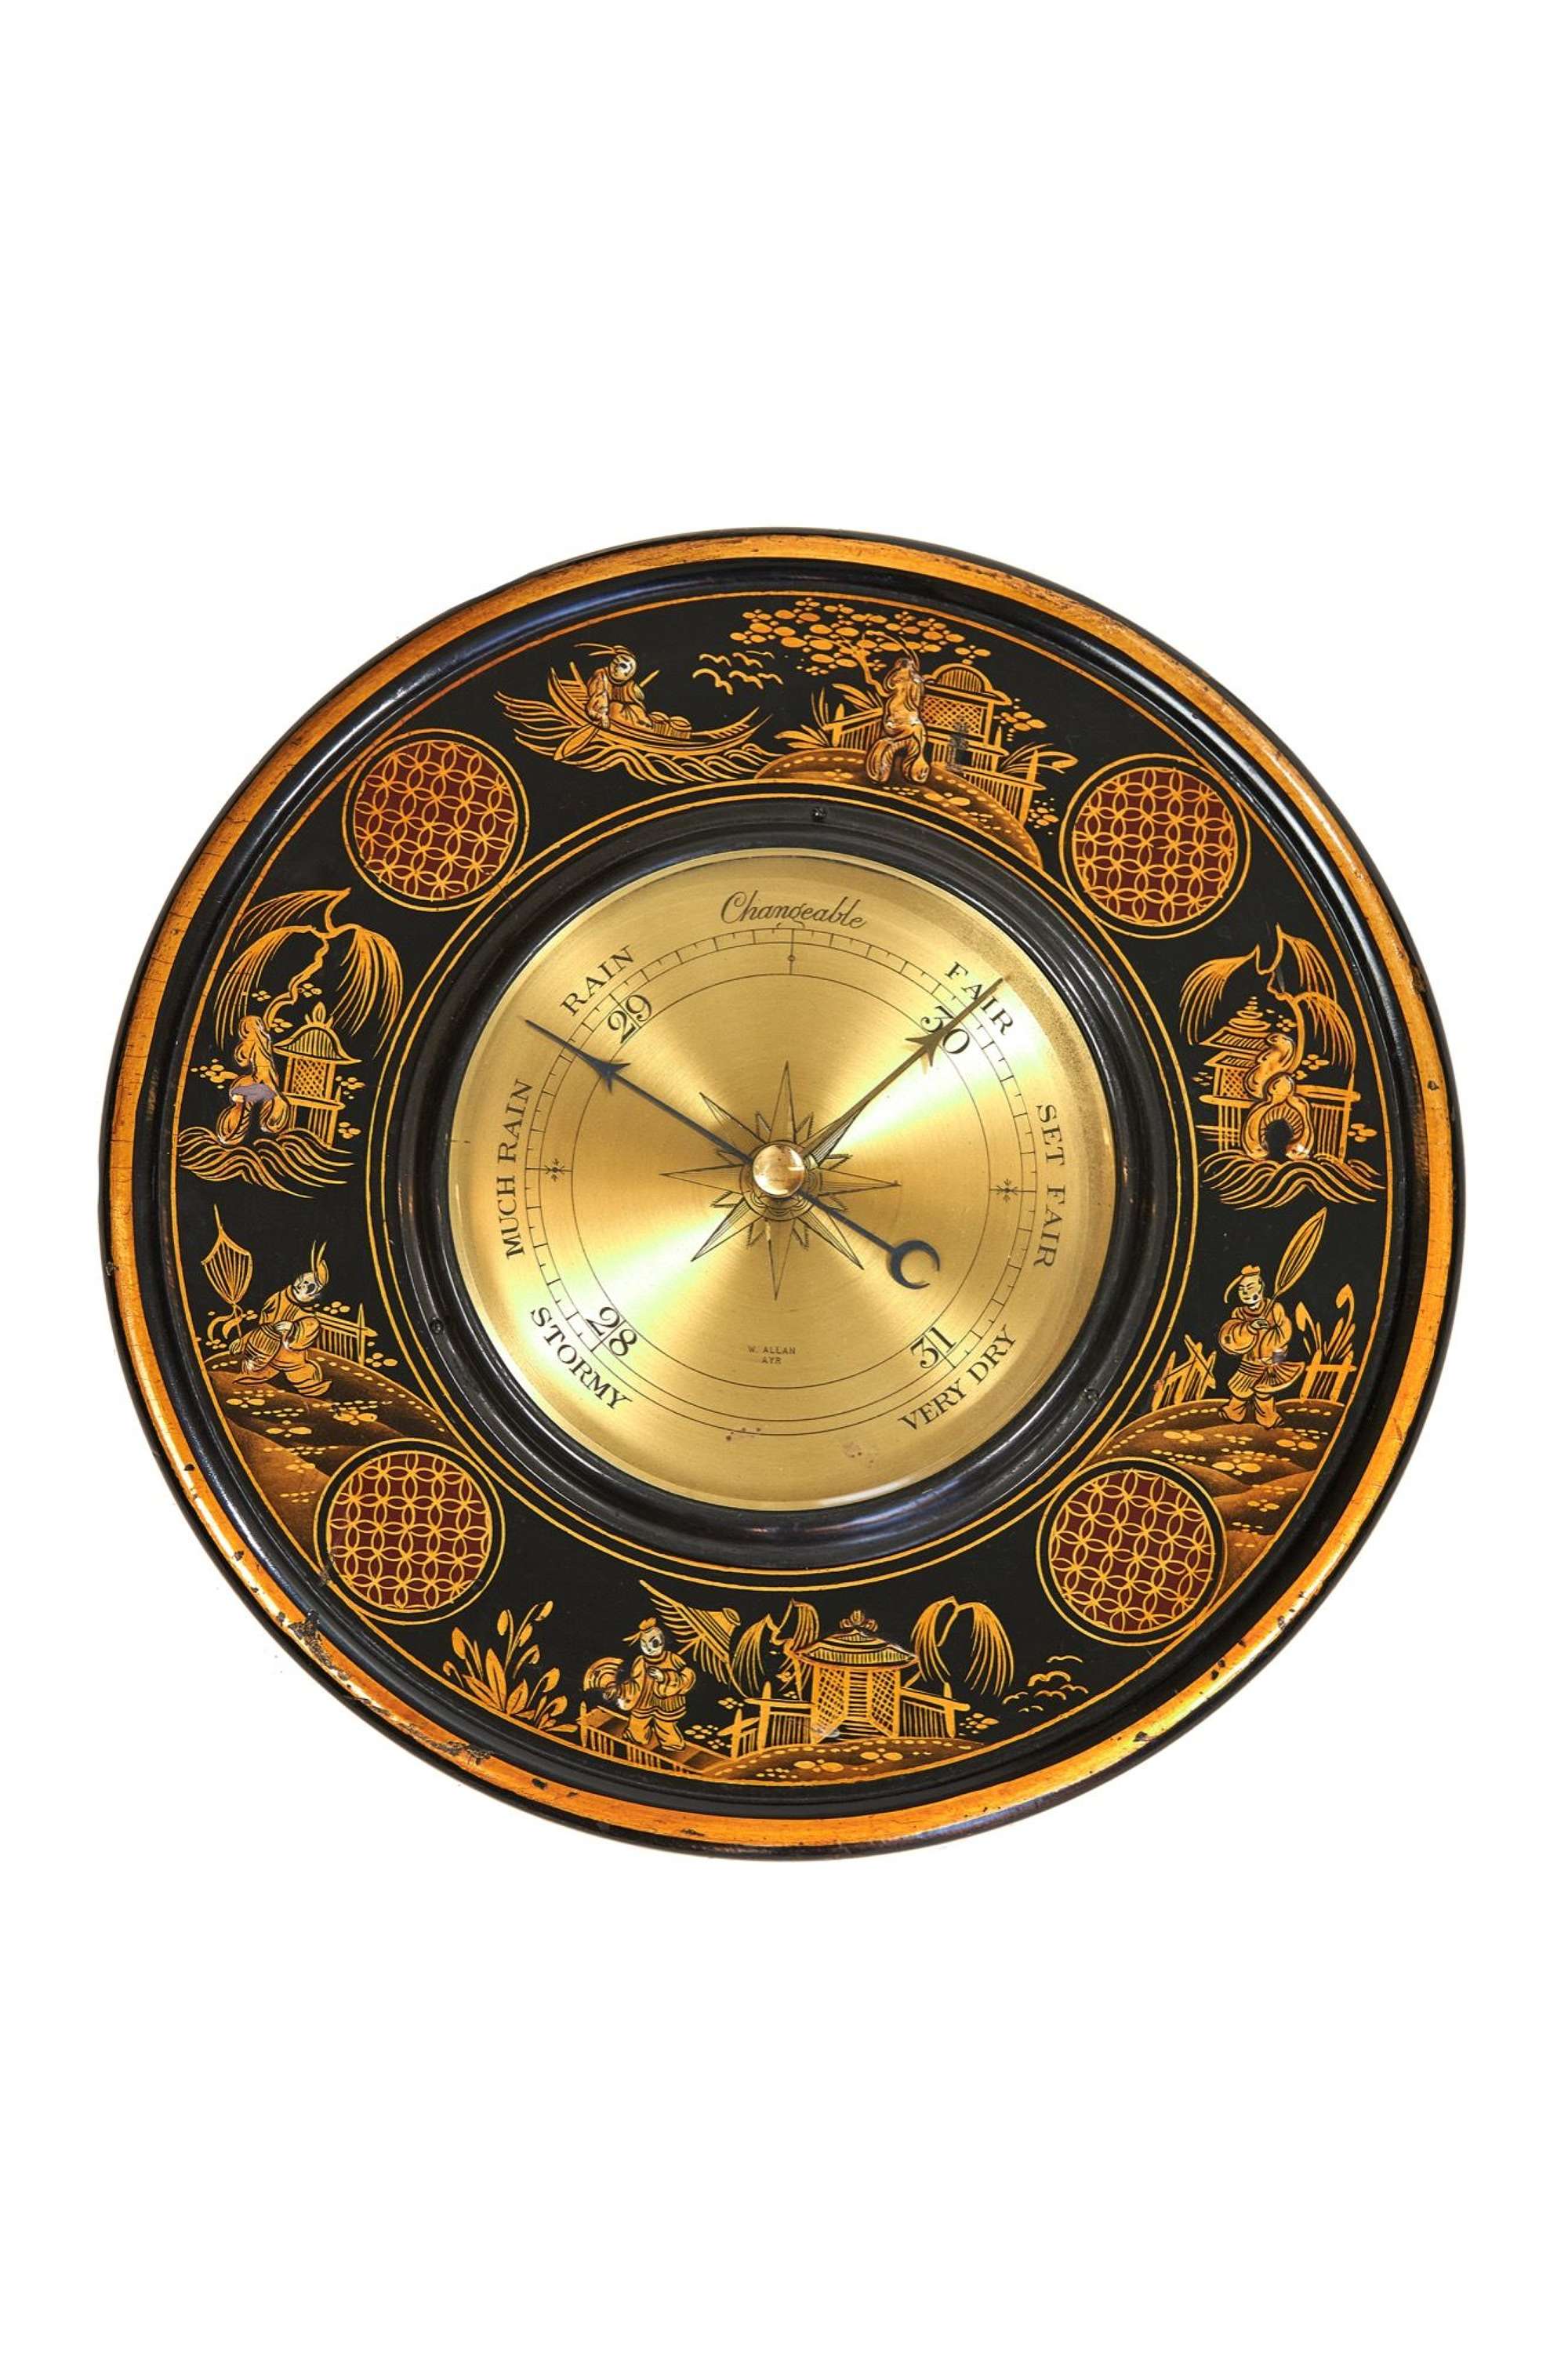 Chinoiserie Decorated Circular Barometer,circa 1930s